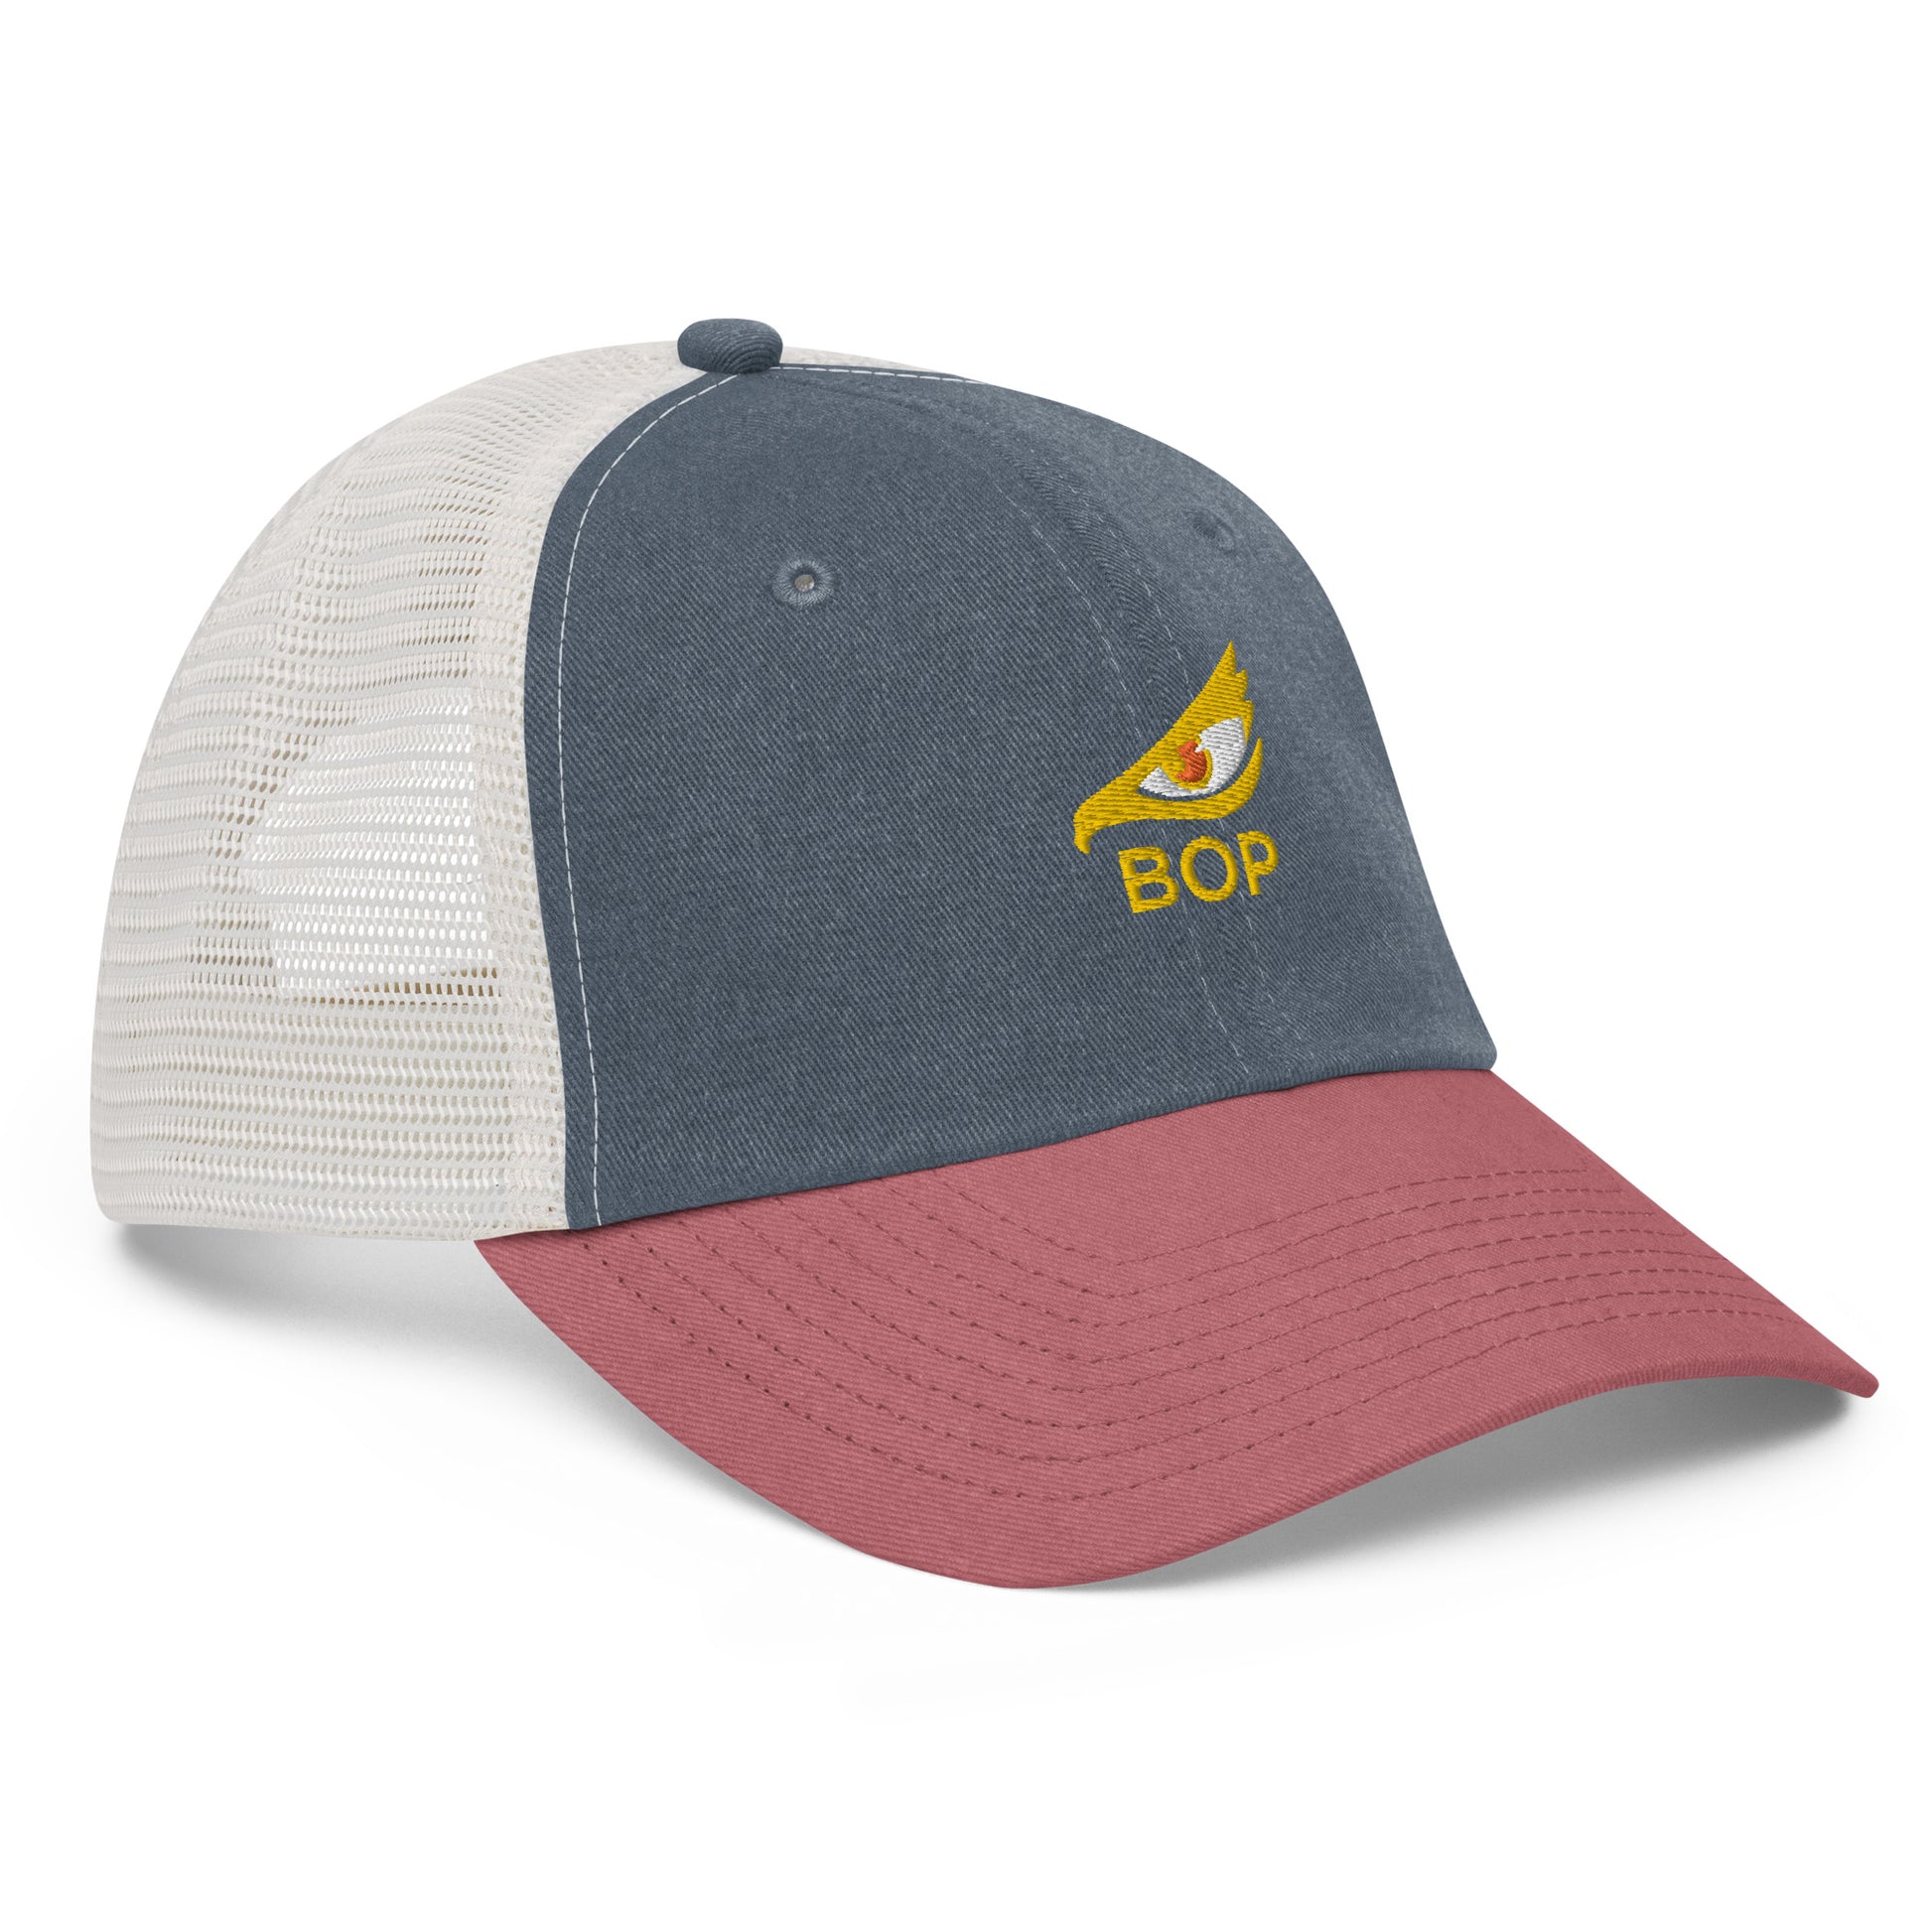 BOP Trucker Hat with Gold Eagle Eye – BirdsofPreyOptics